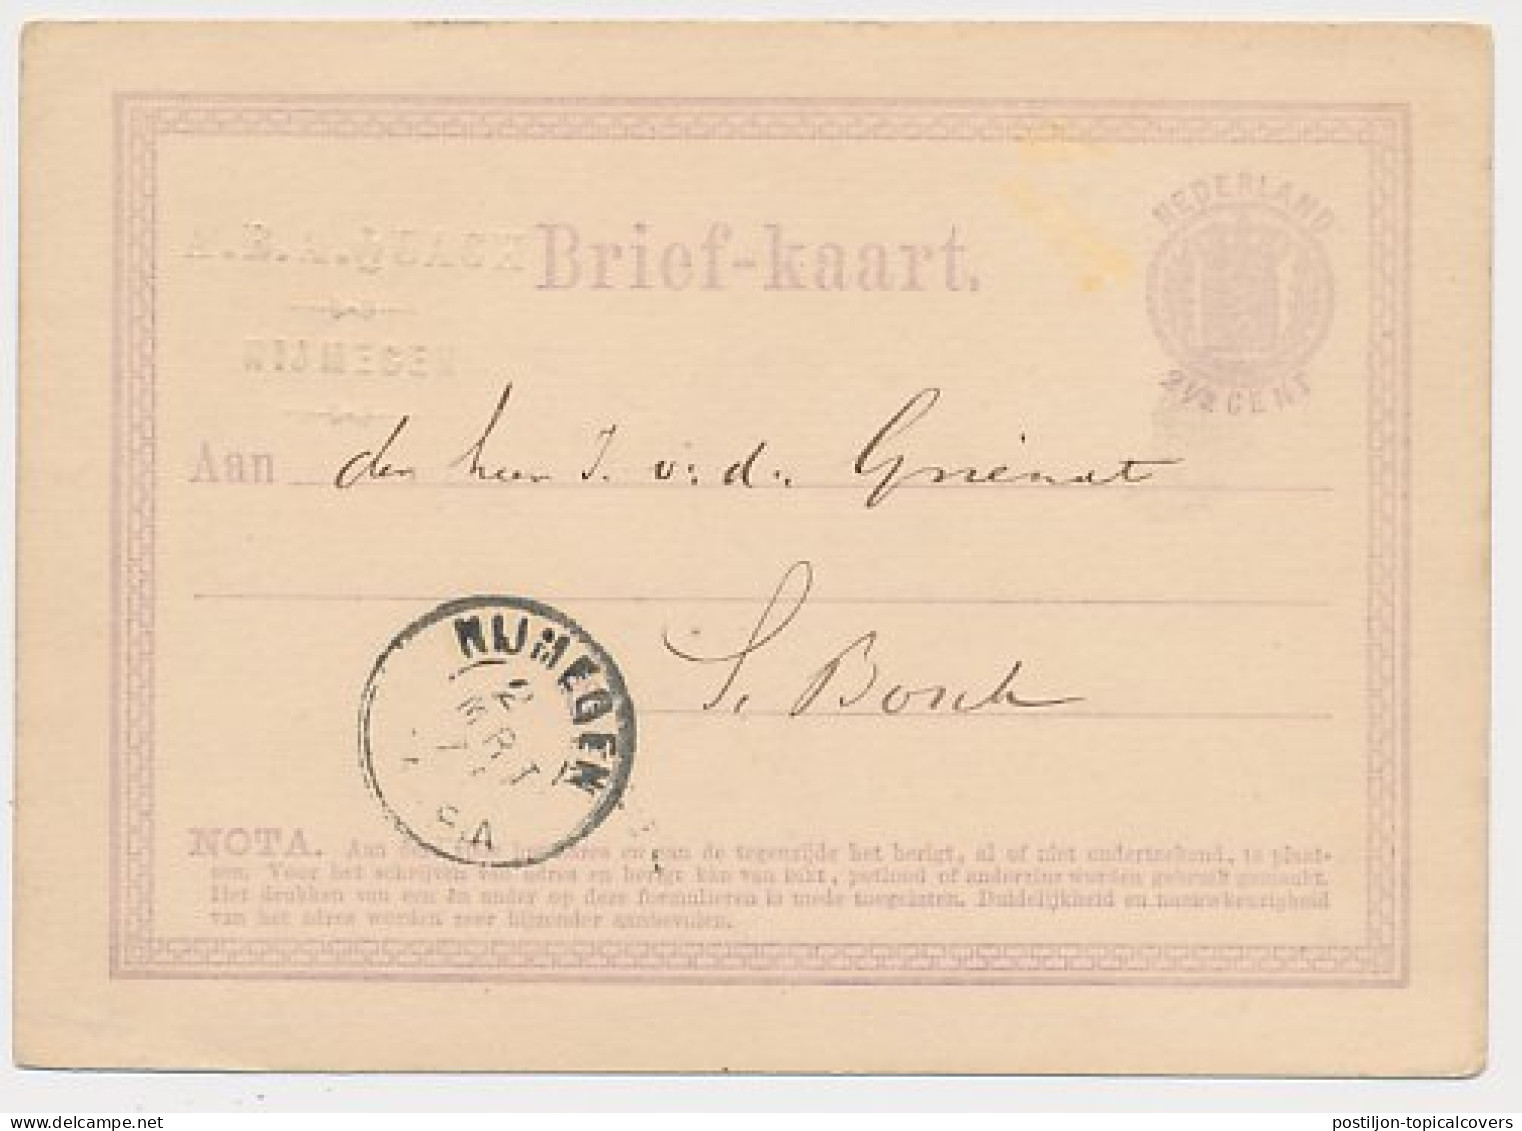 Briefkaart G. 1 Firma Blinddruk Nijmegen 1872 - Postal Stationery